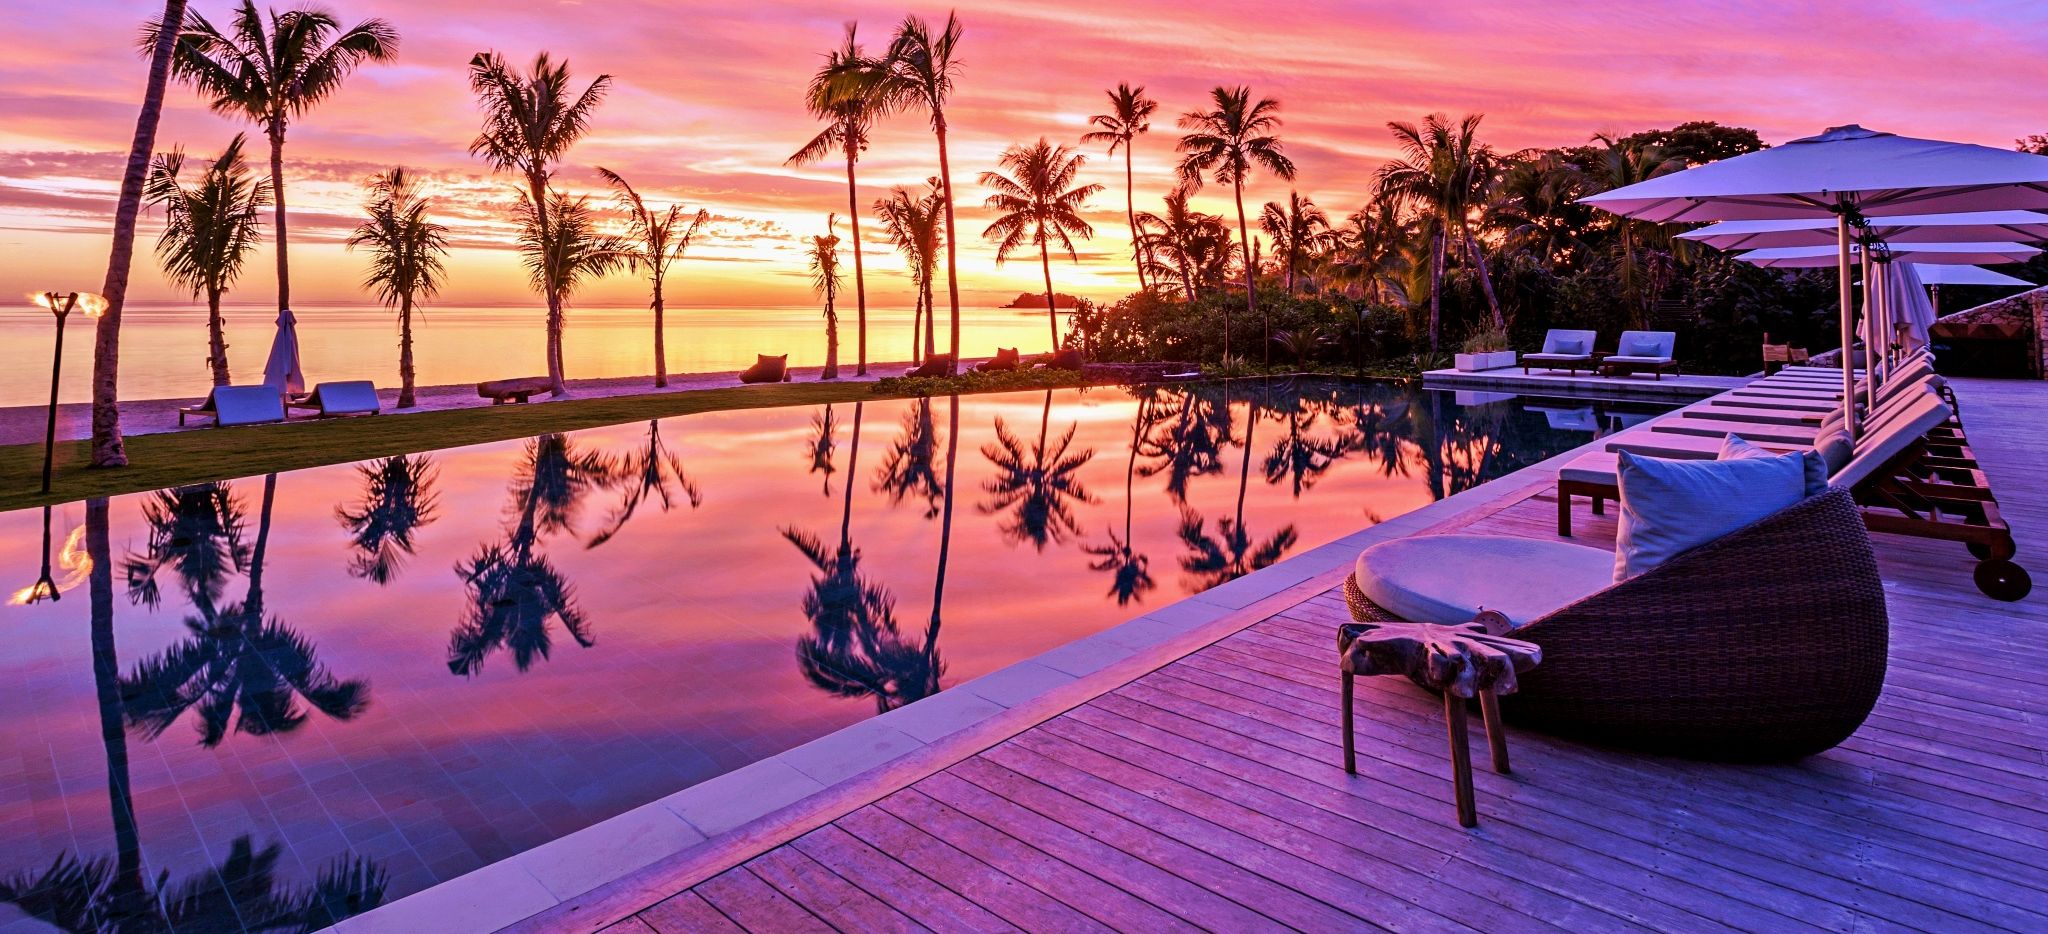 Sonnenuntergang über dem Pool des Raustaurants Tovolea im Hotel Six Senses Fiji